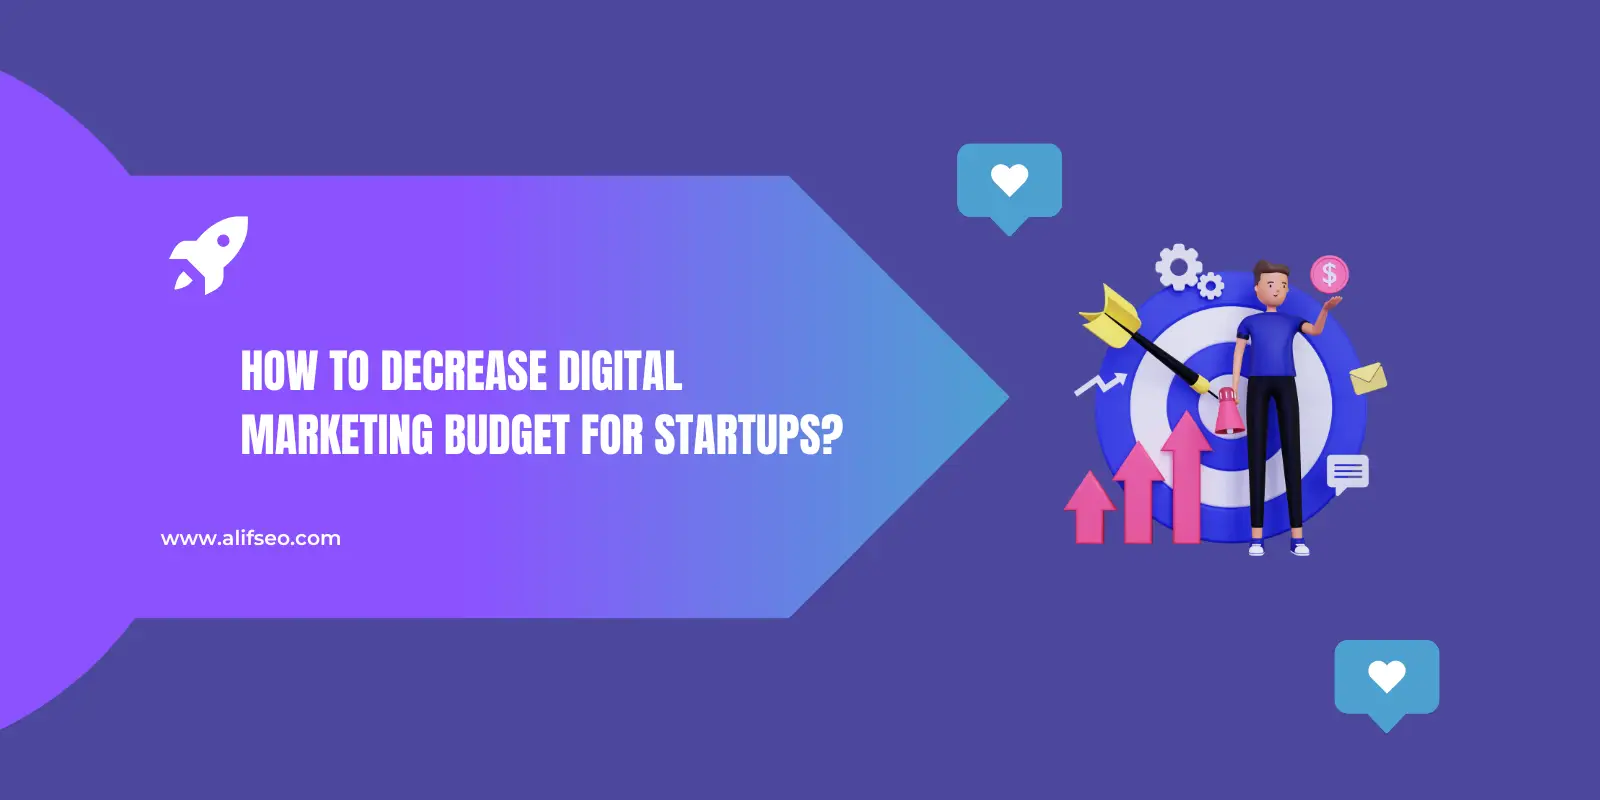 How to Decrease Digital Marketing Budget for Startups?